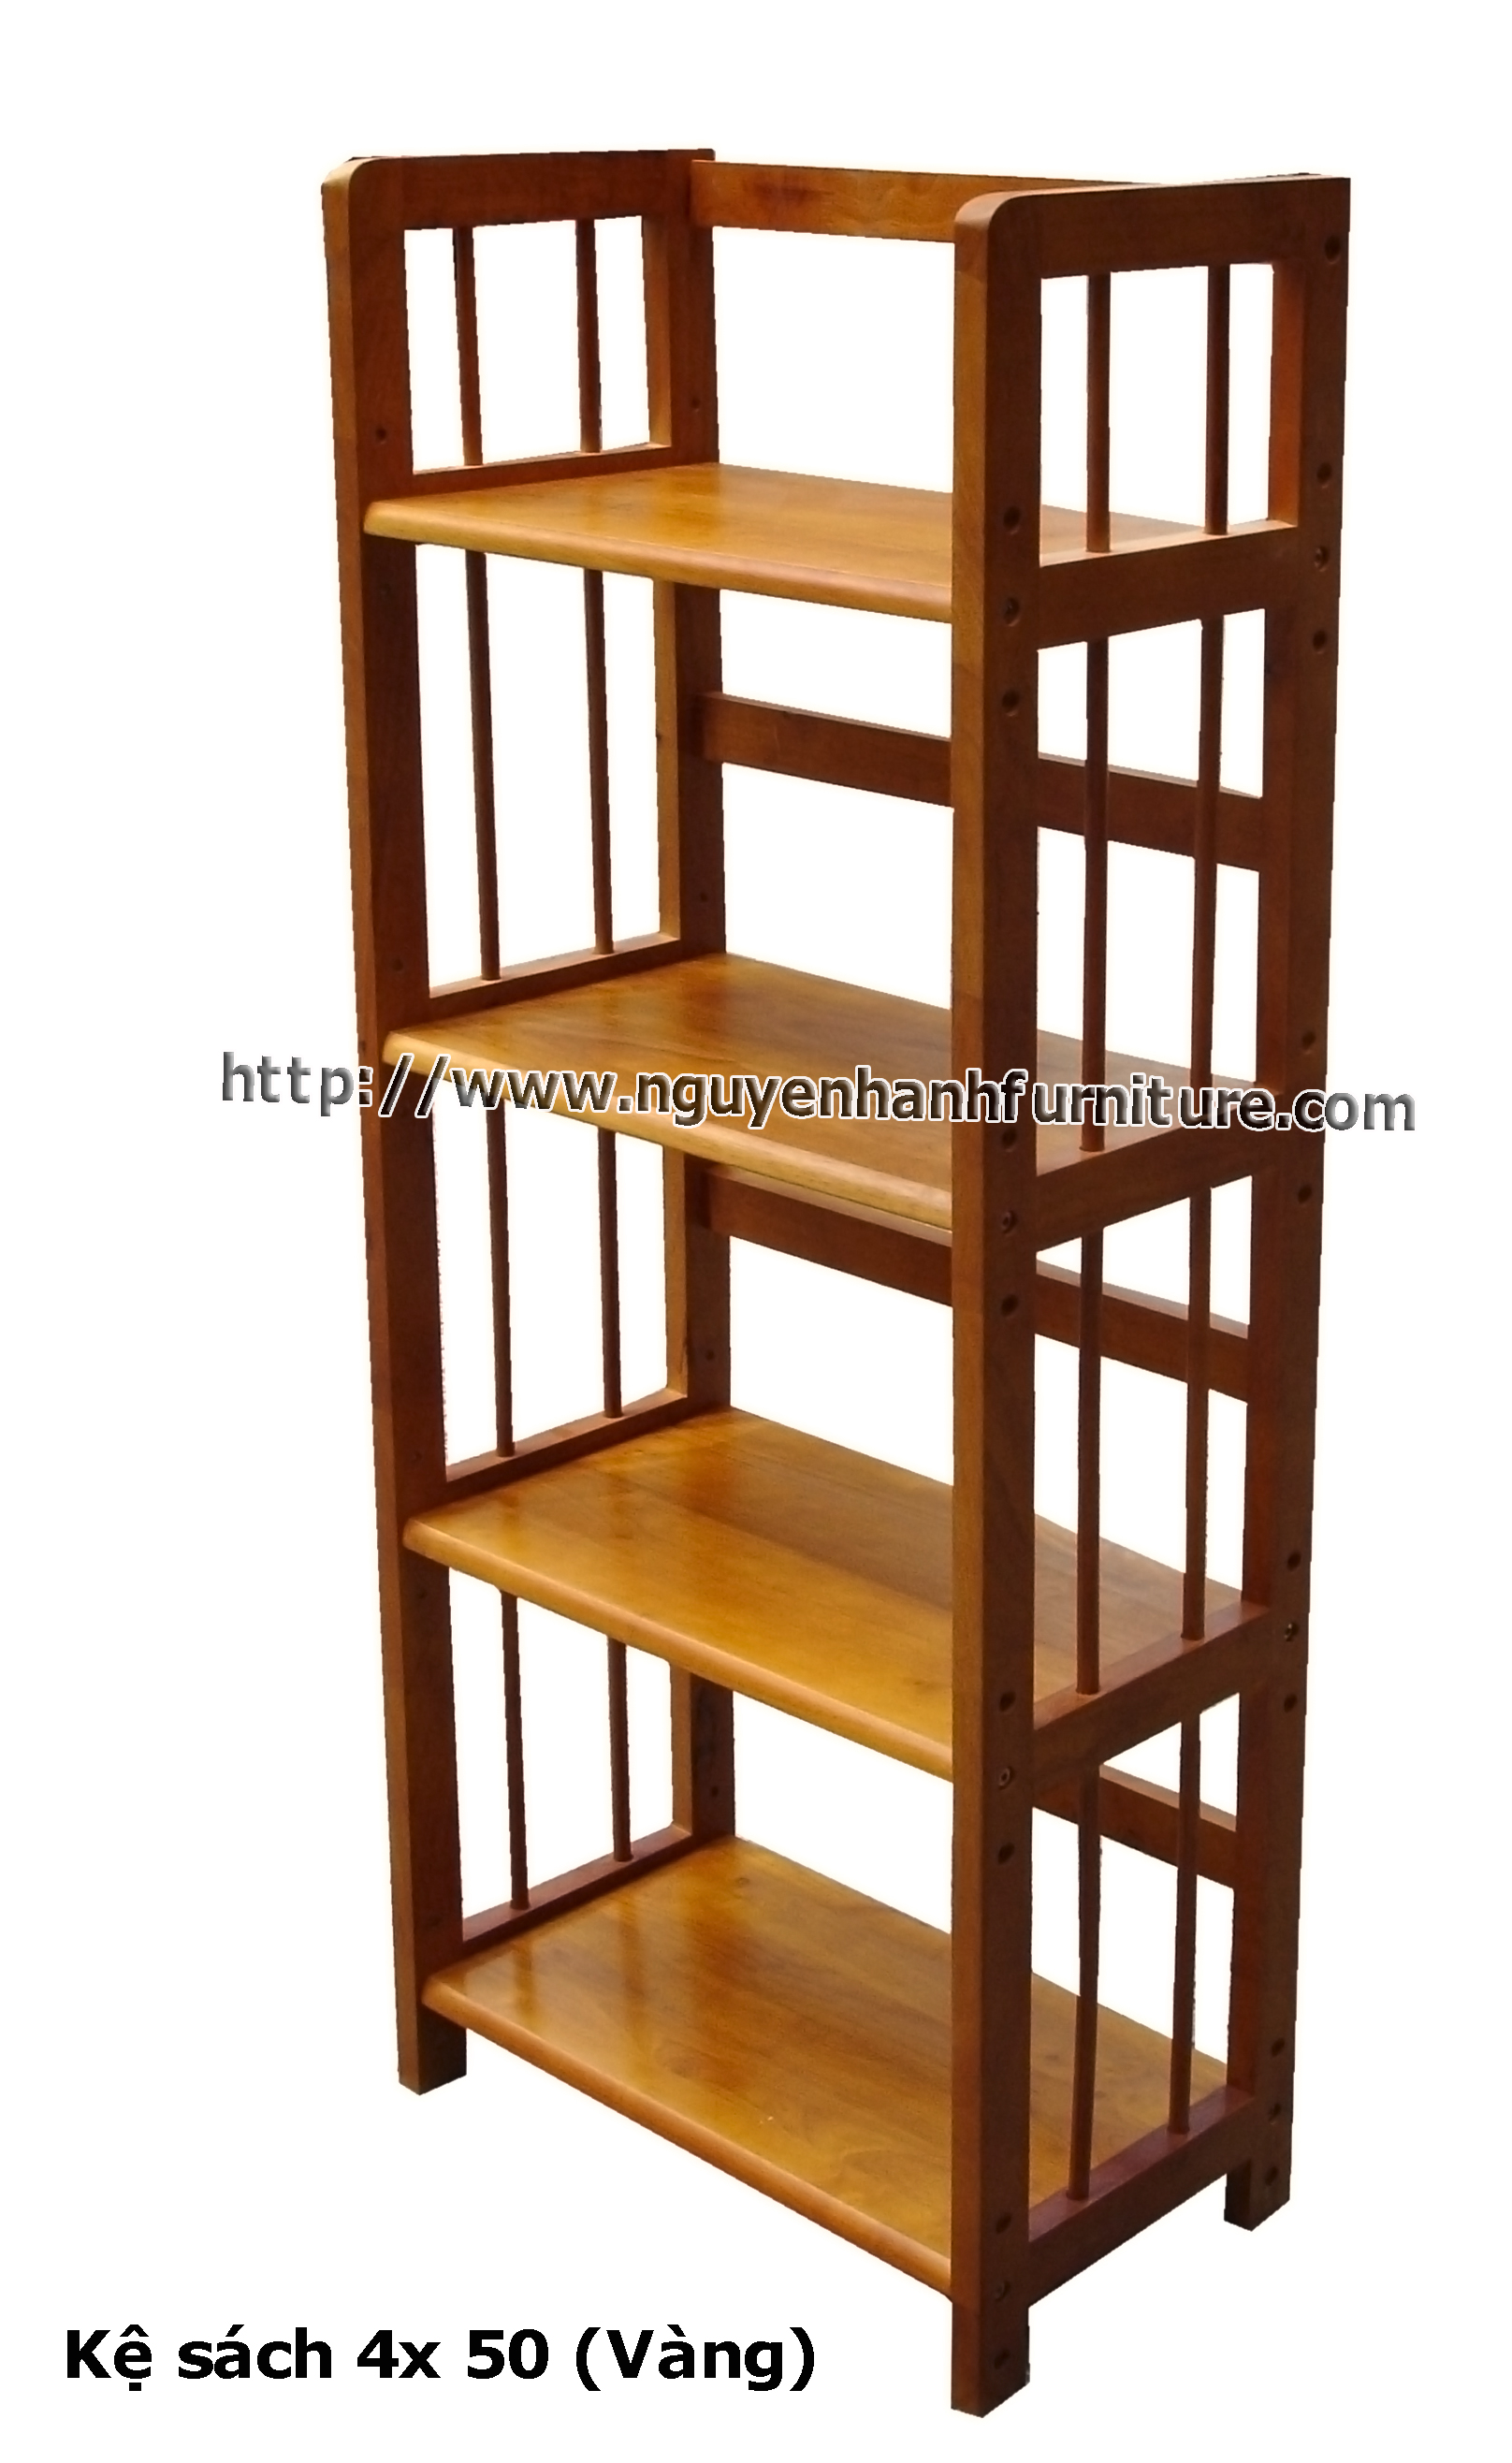 Name product: 4 storey Adjustable Bookshelf 50 (Yellow) - Dimensions: 50 x 28 x 120 (H) - Description: Wood natural rubber